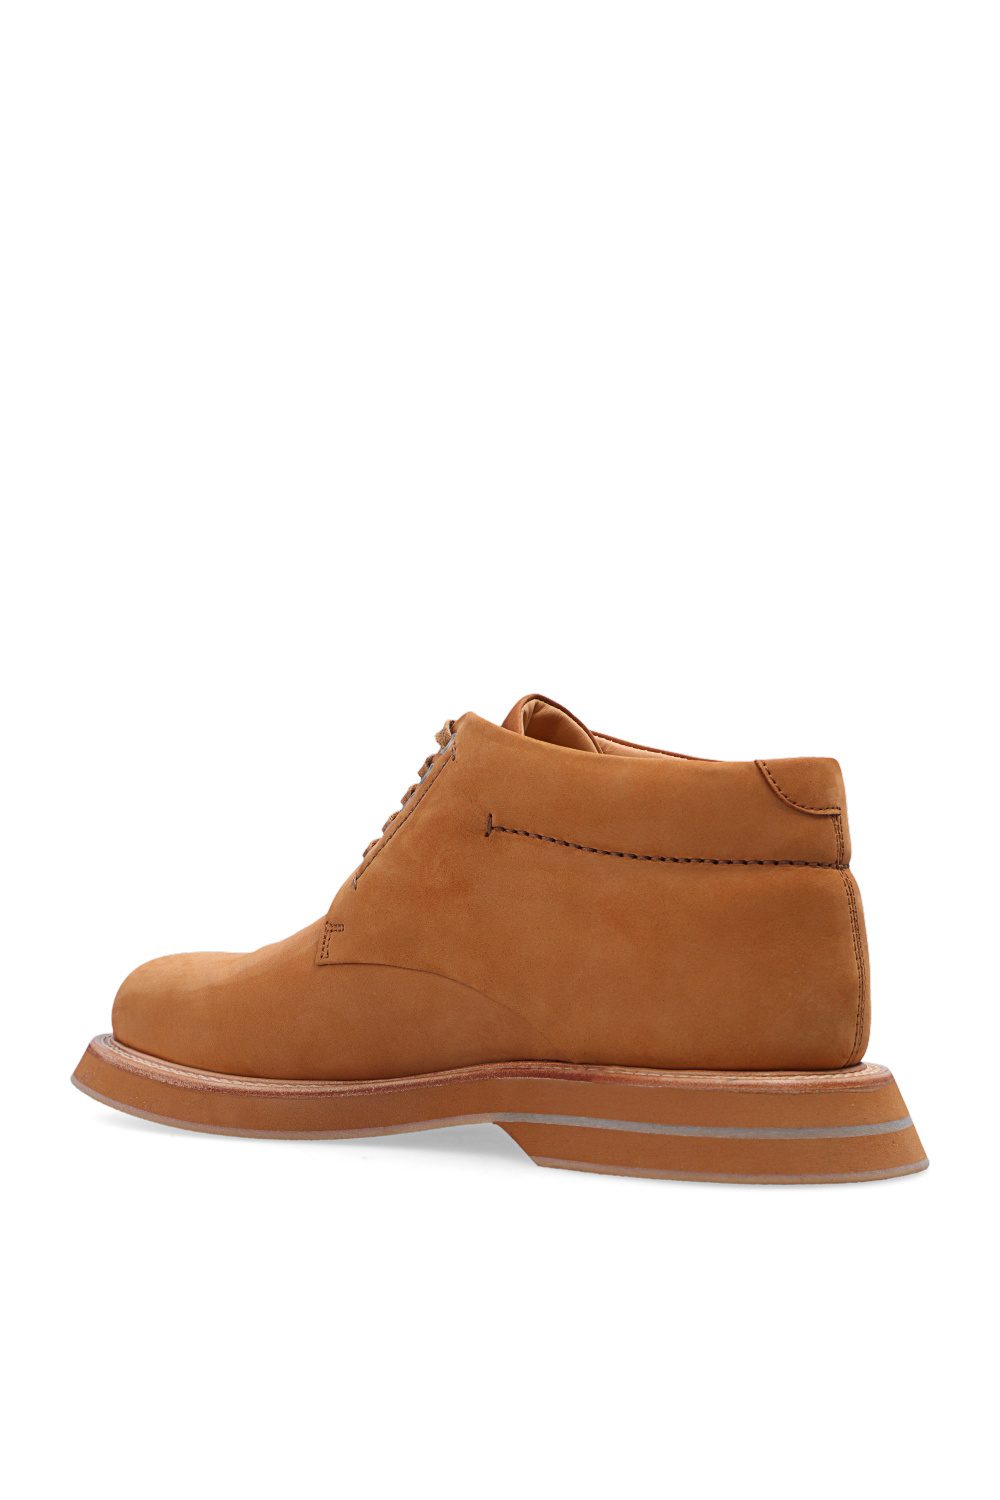 Jacquemus ‘Bricolo’ leather shoes